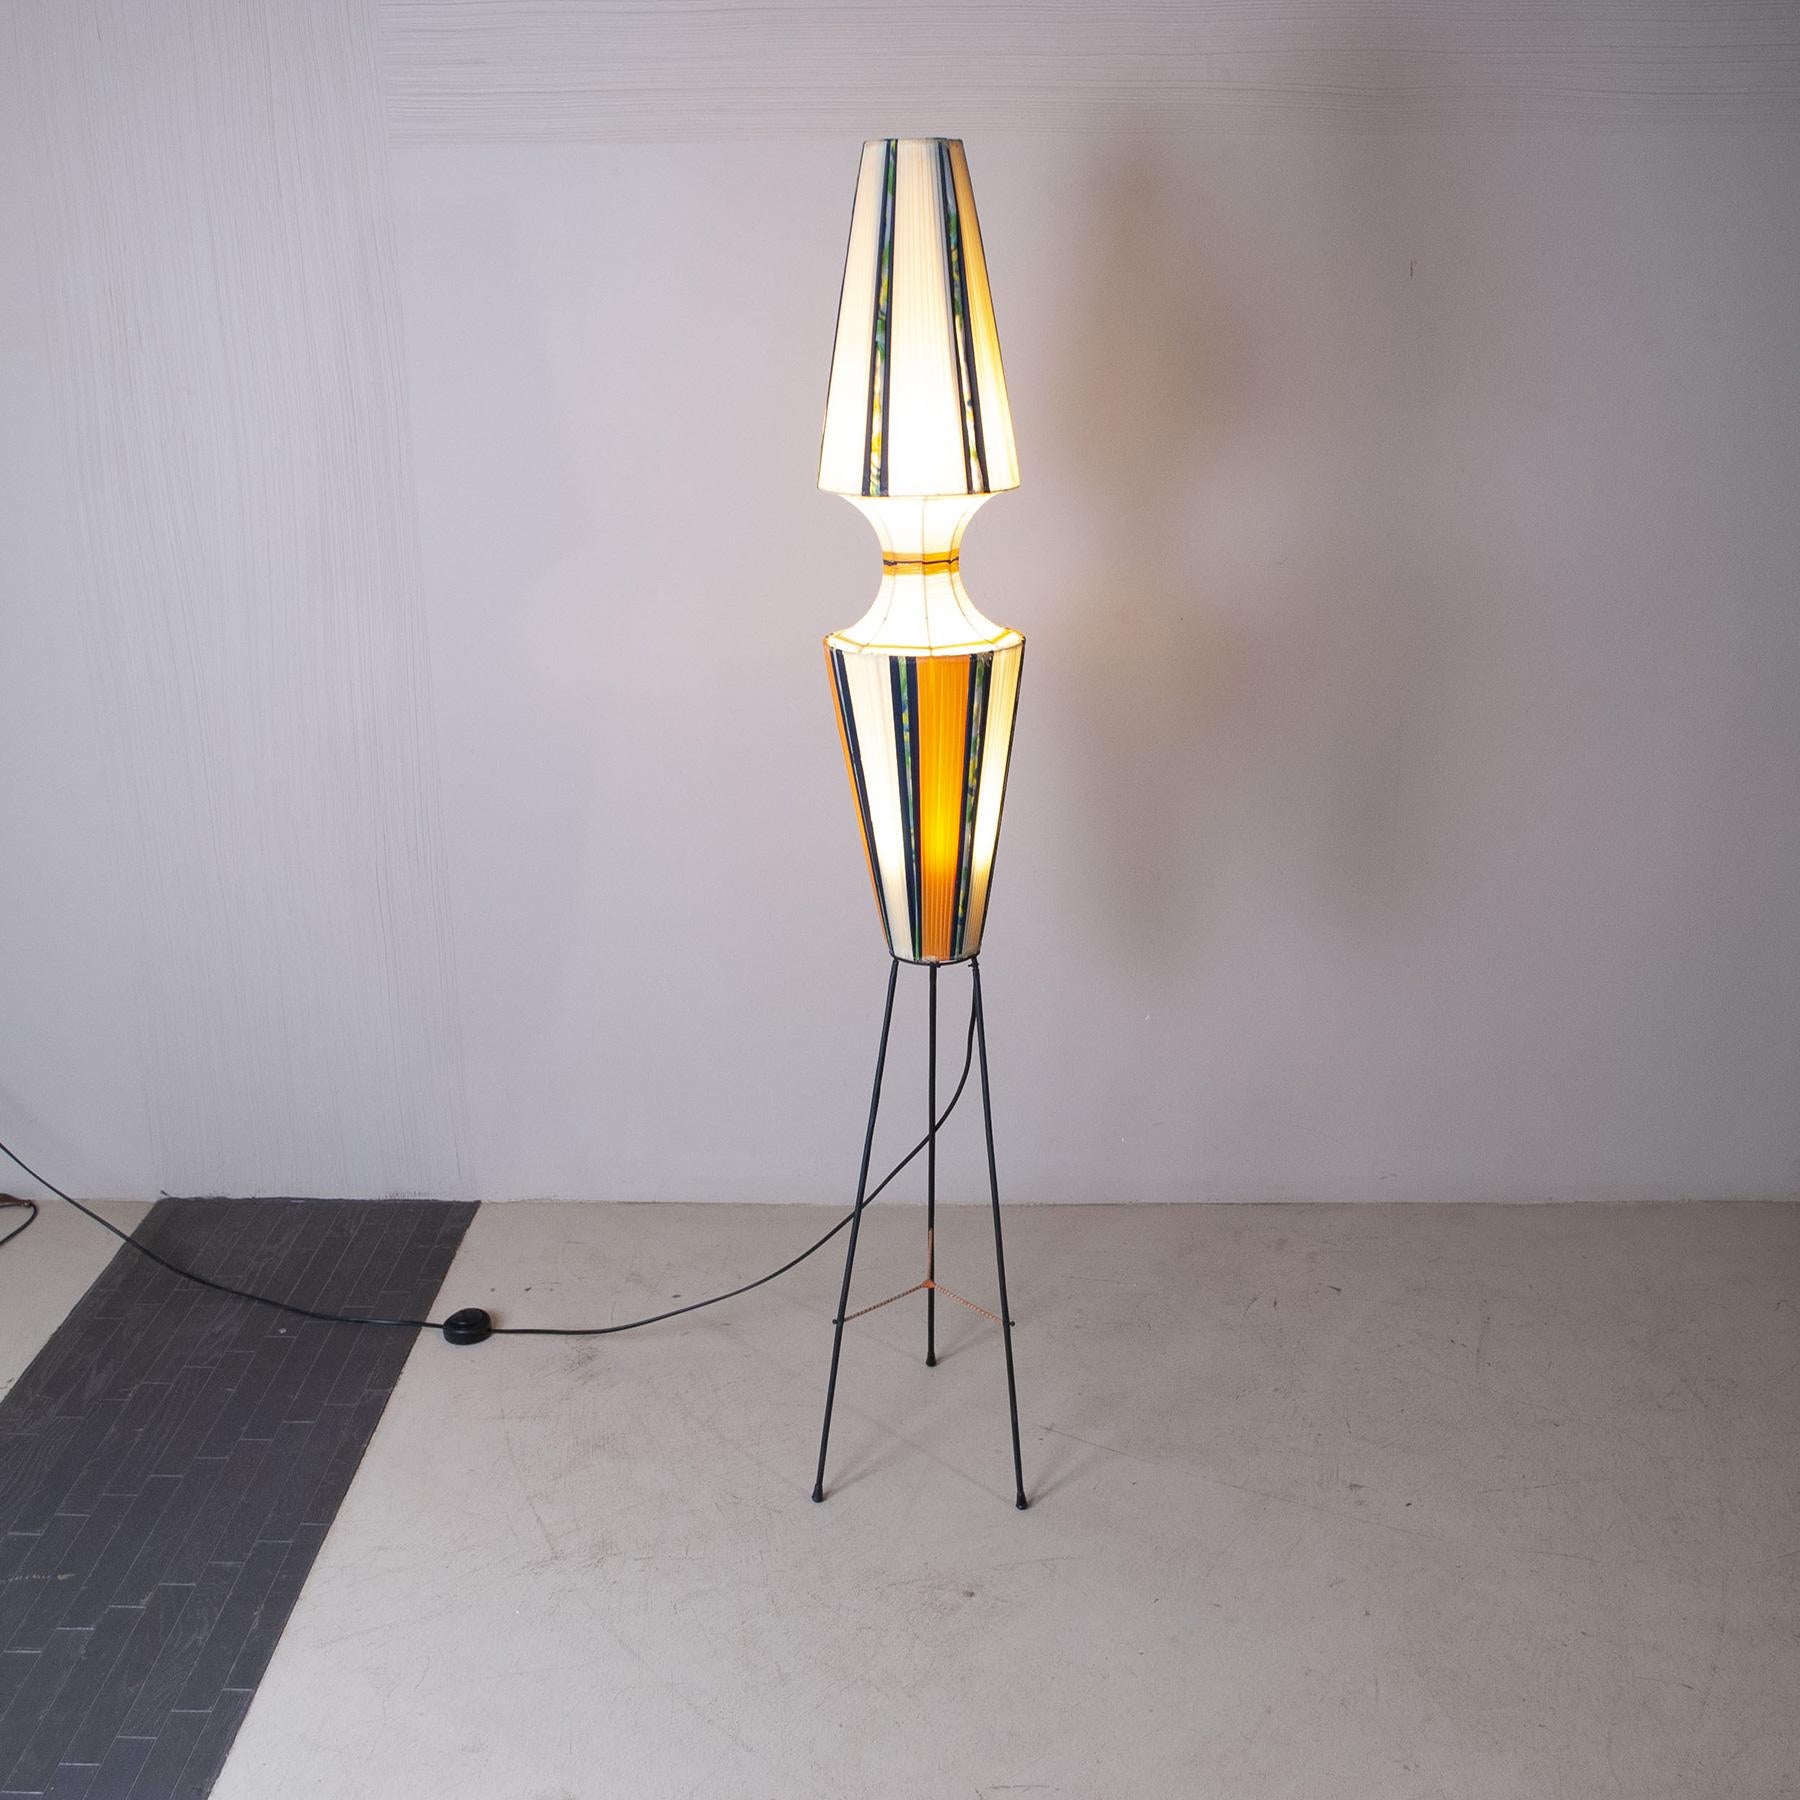 Mid-20th Century Italian Production Floor Lamp, Late 1950s For Sale